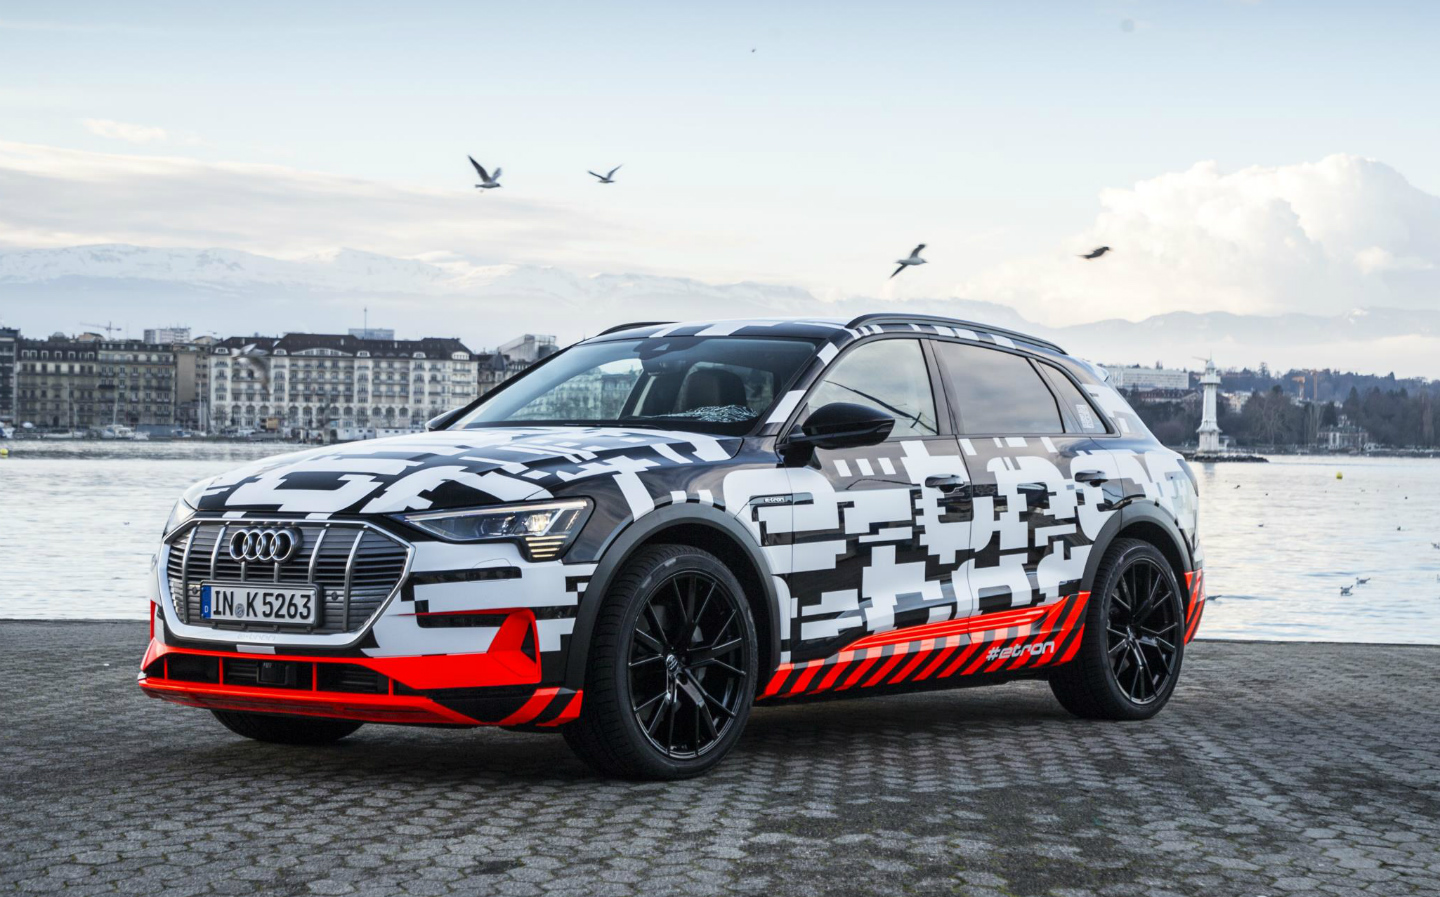 Audi e-tron electric SUV on sale now